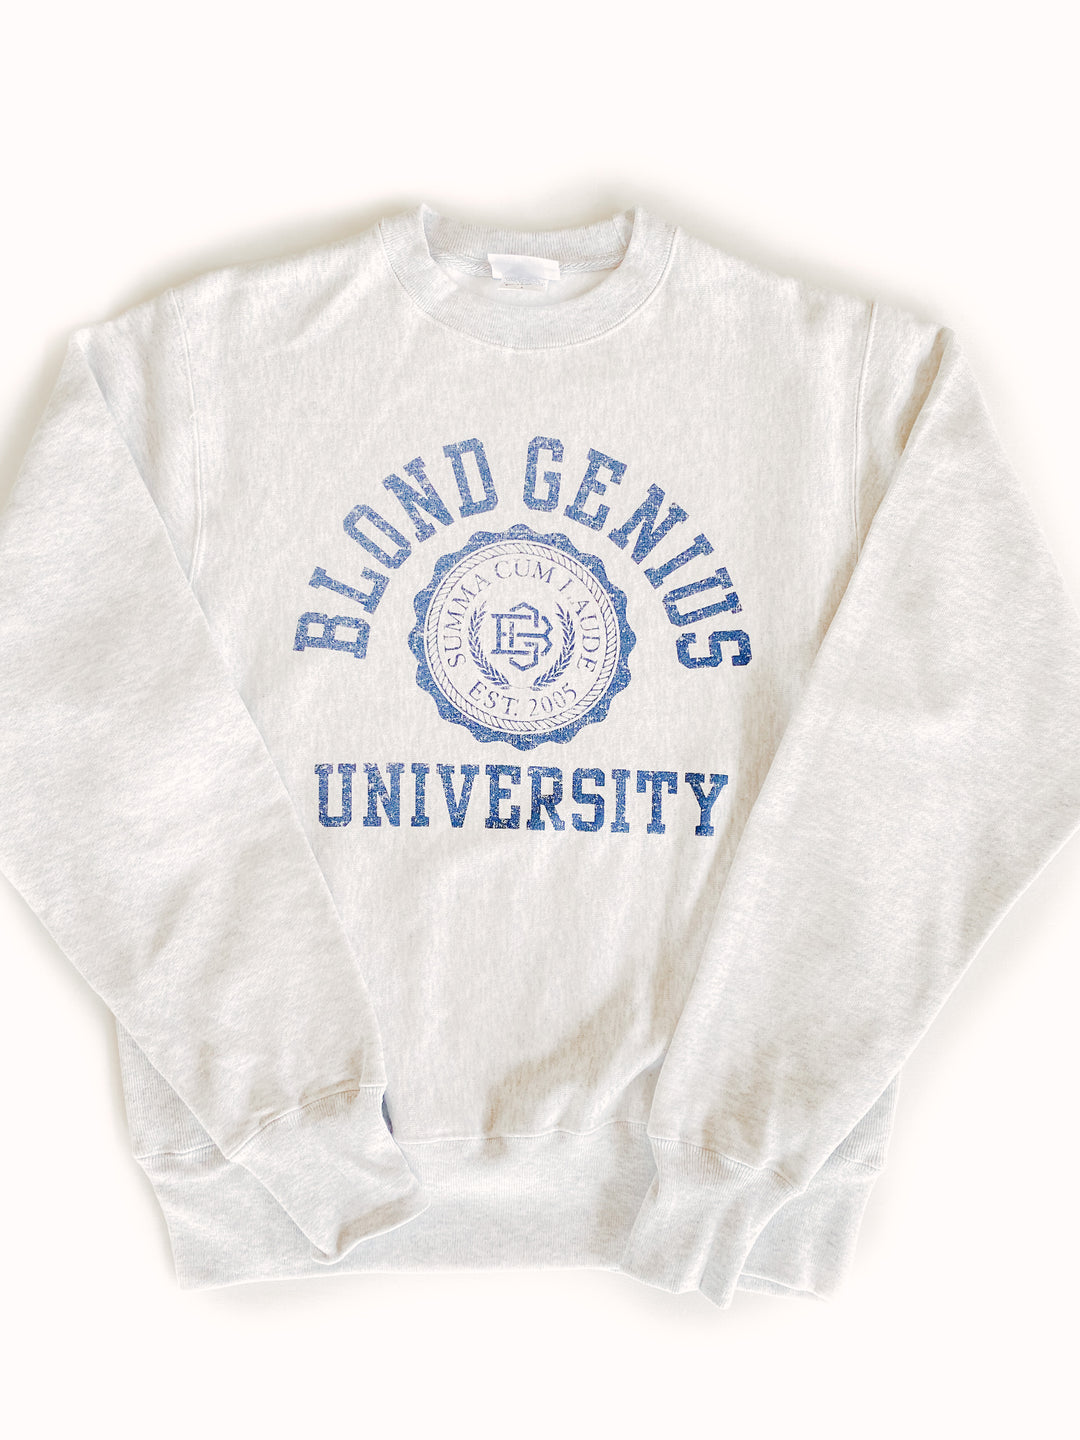 Blond Genius - Blond Genius University Sweatshirt in Gray